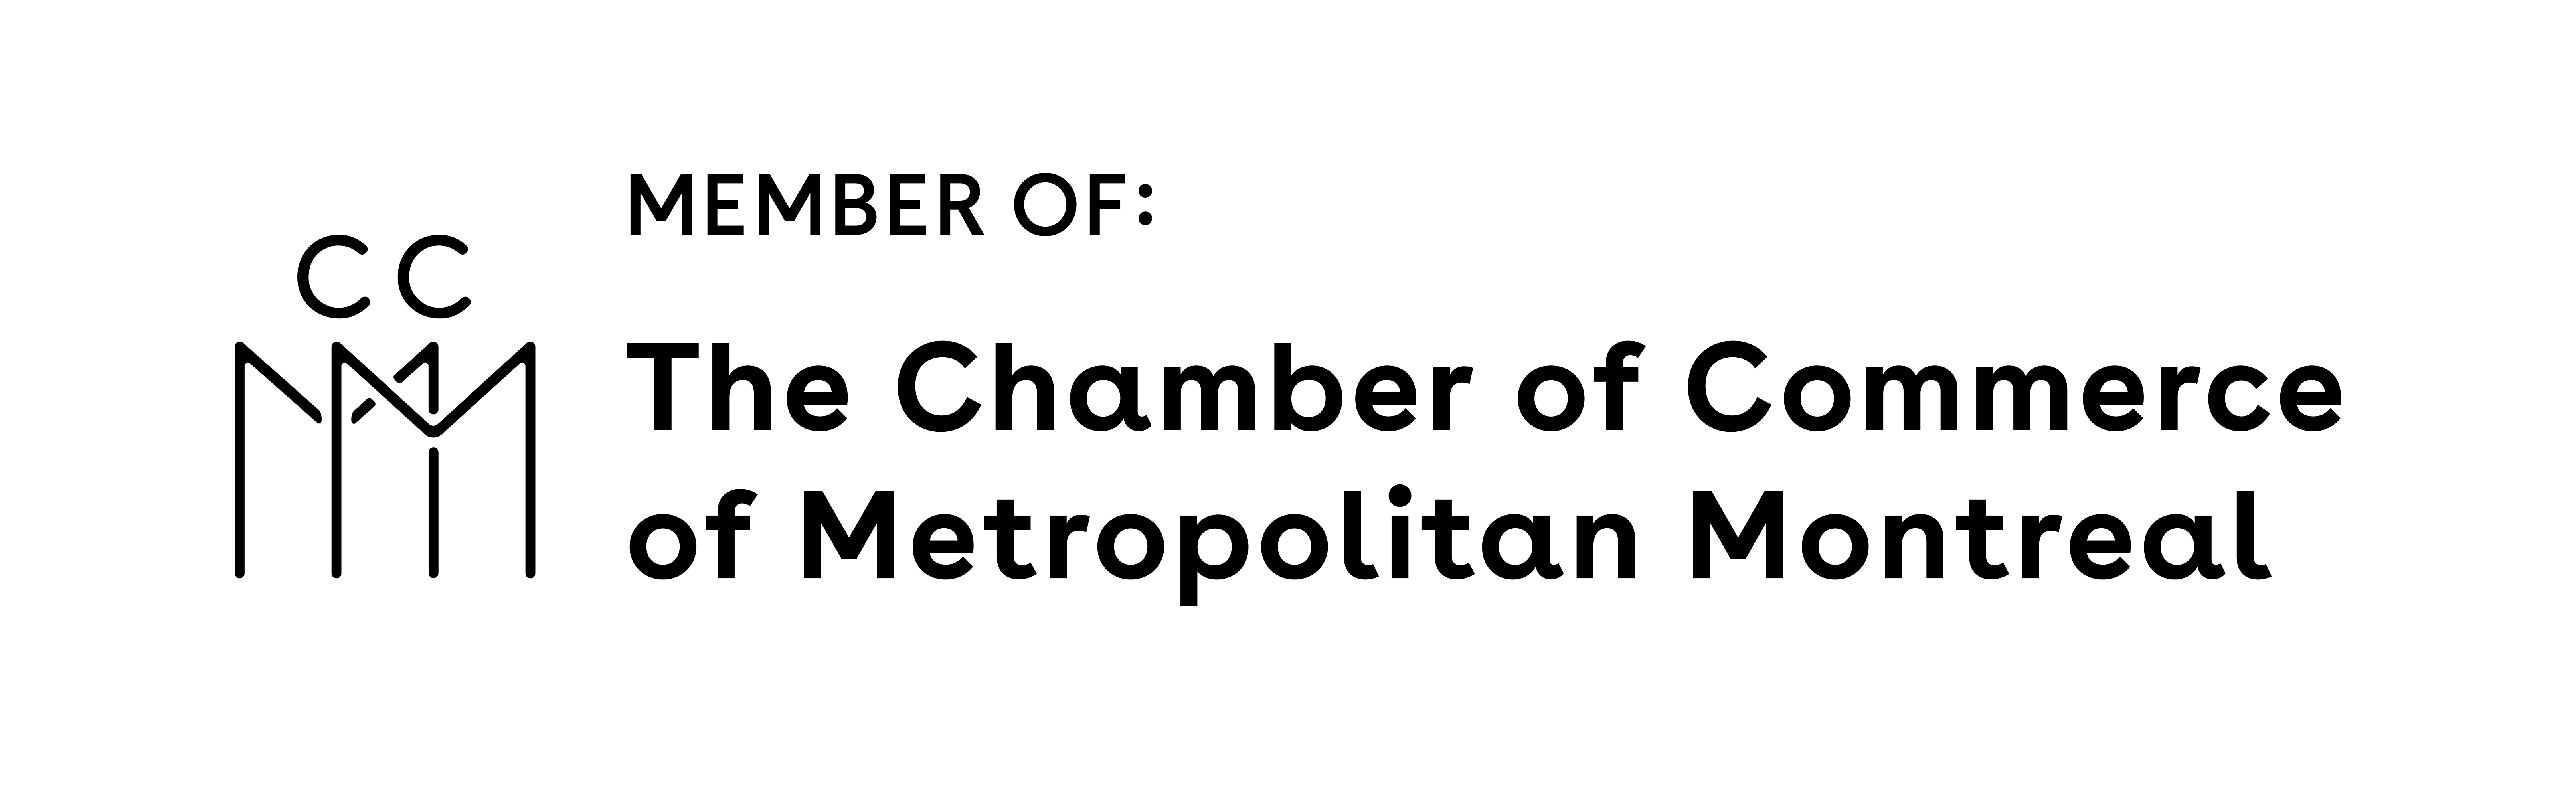 Chamber of Commerce of Metropolitan Montreal